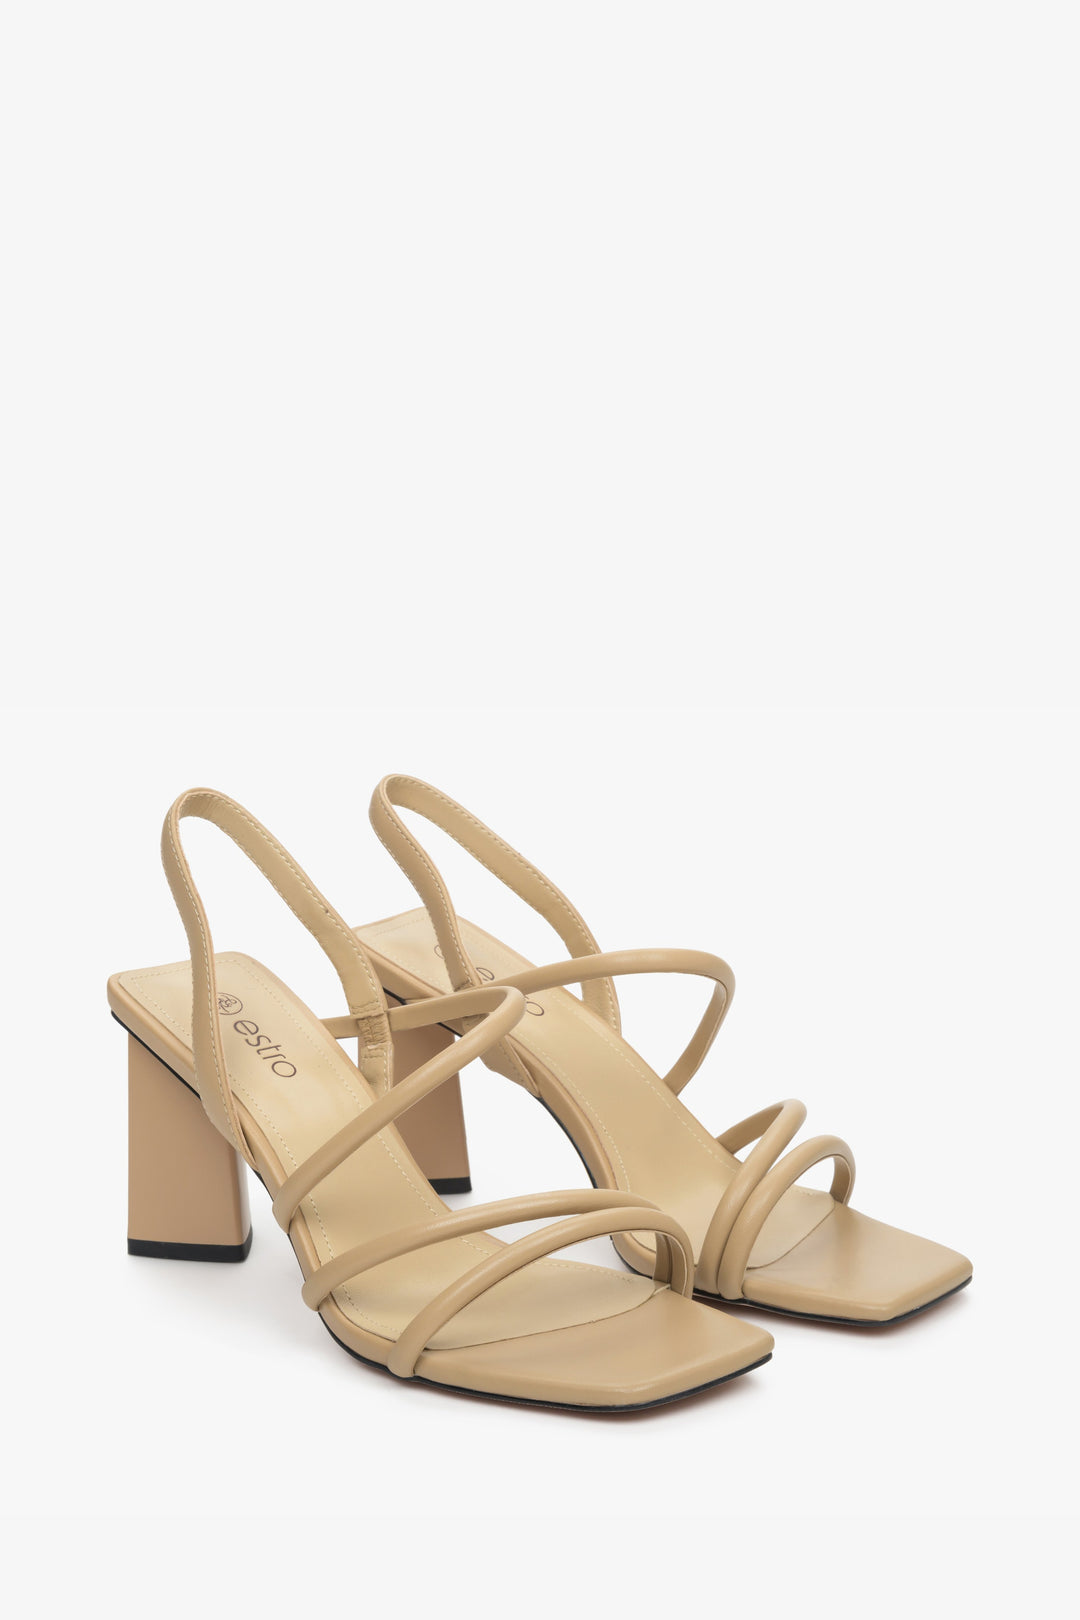 Sand beige women's strappy sandals on a block heel by Estro.